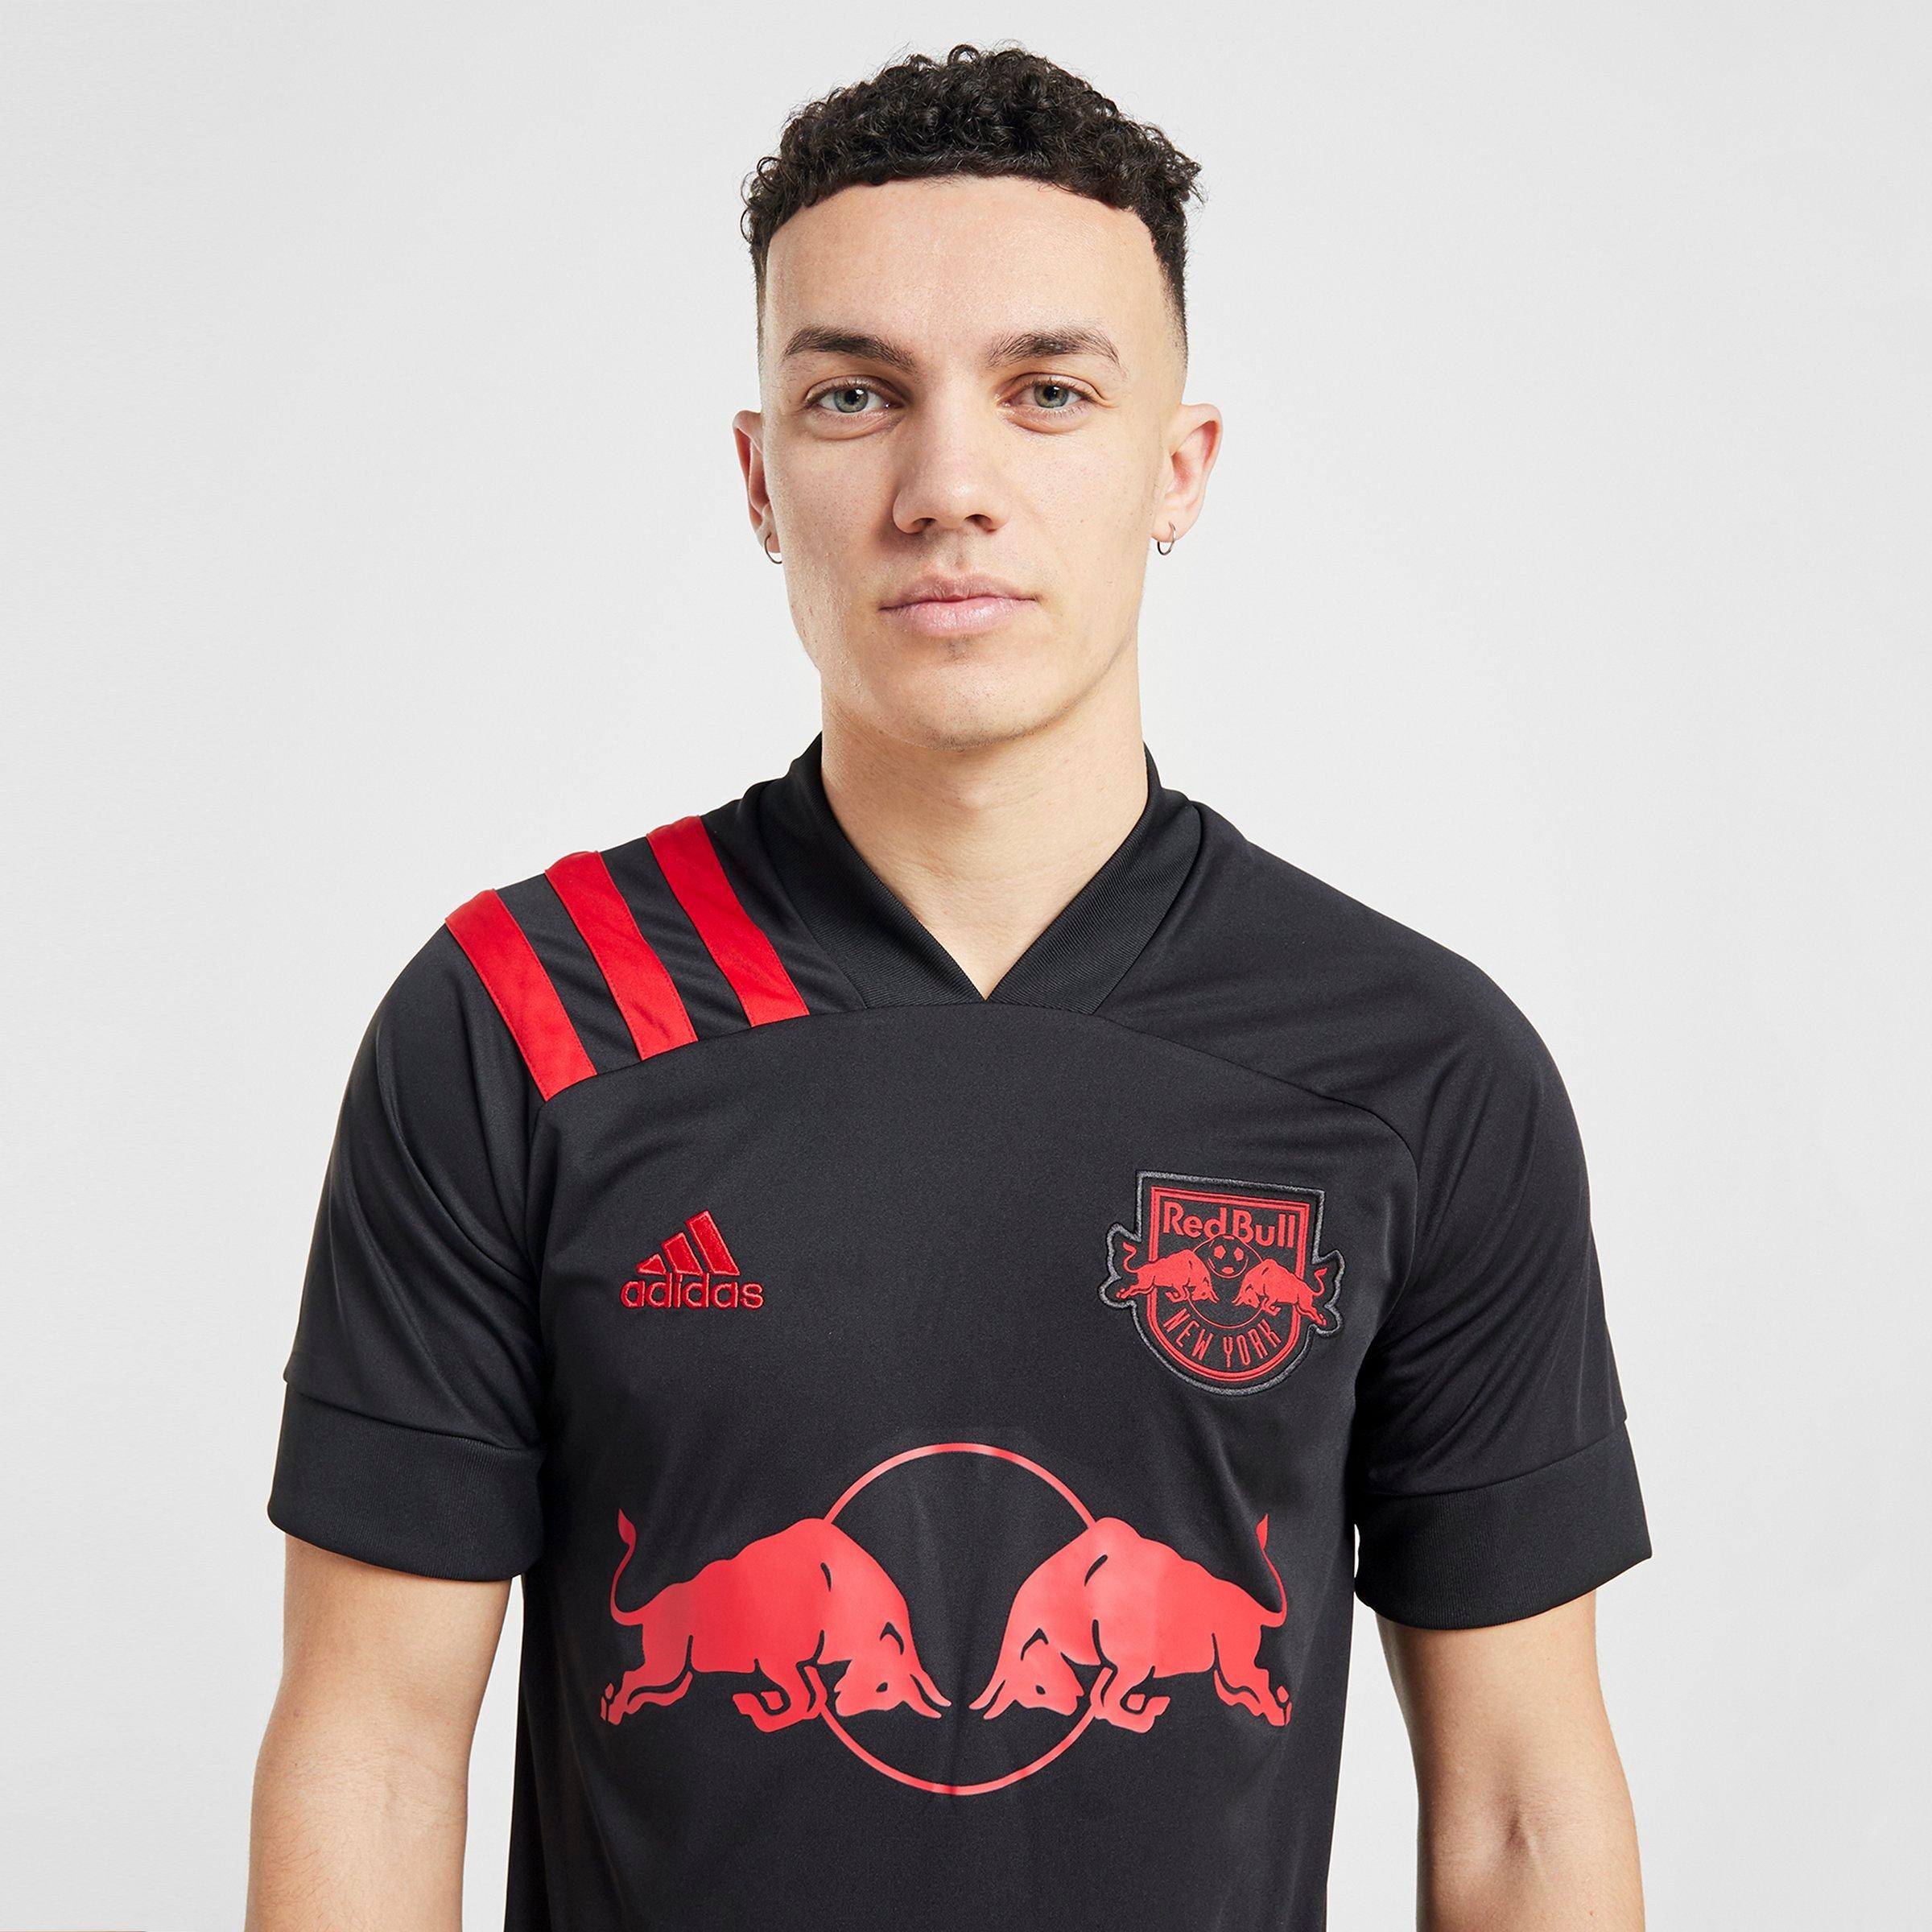 unisex shirt Soccer team t-shirt comfortable tees with New York Red Bul logo